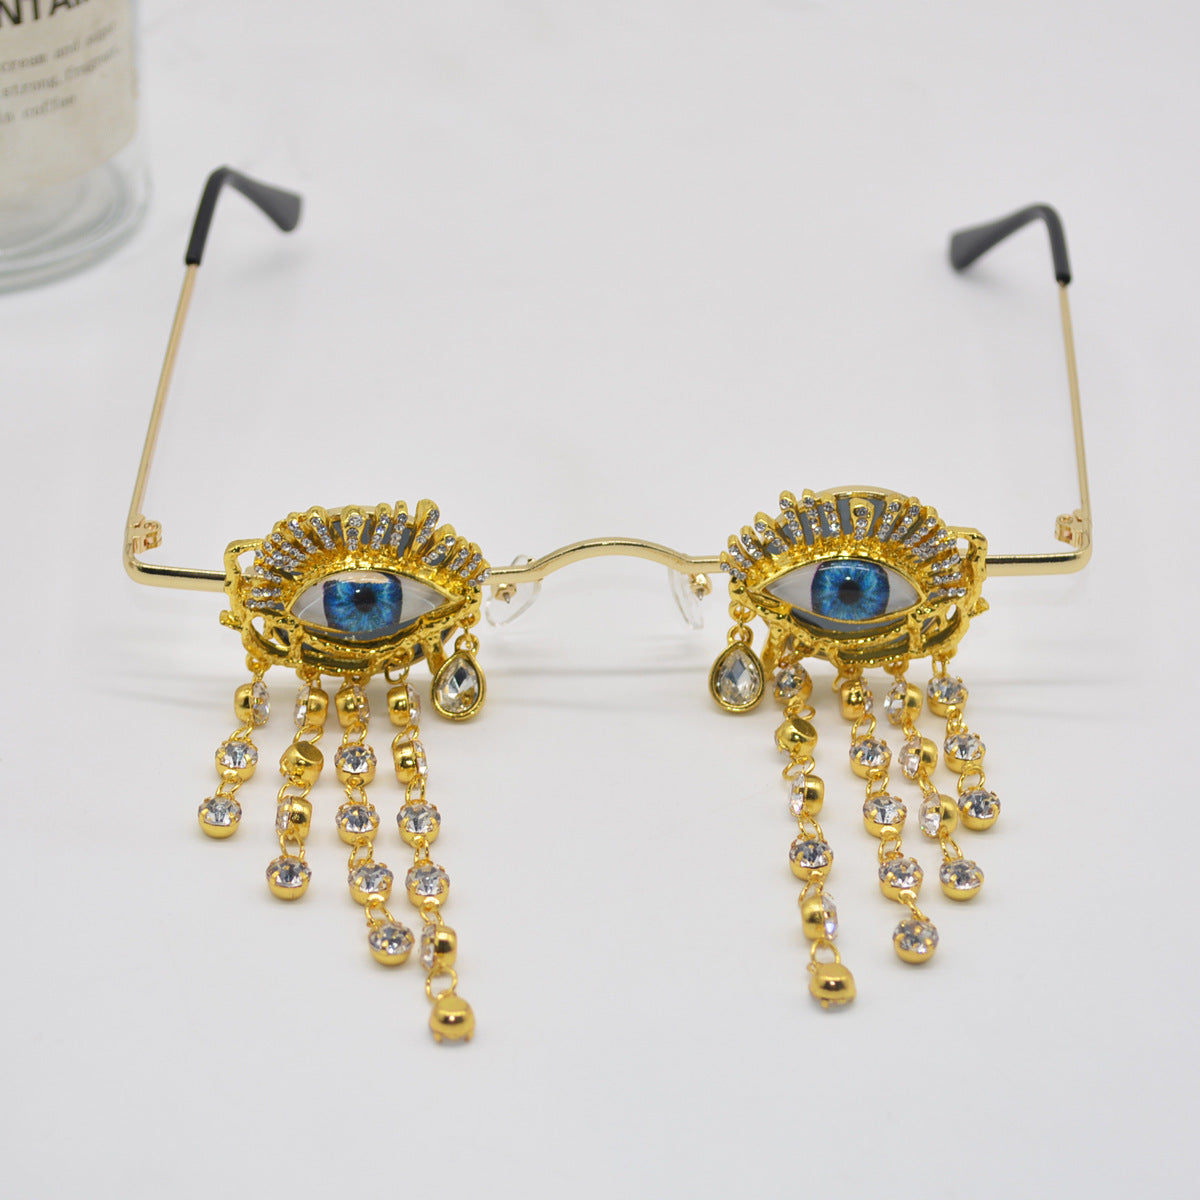 Ogle- the Surrealist Flip Lense Blue Eyed Glasses